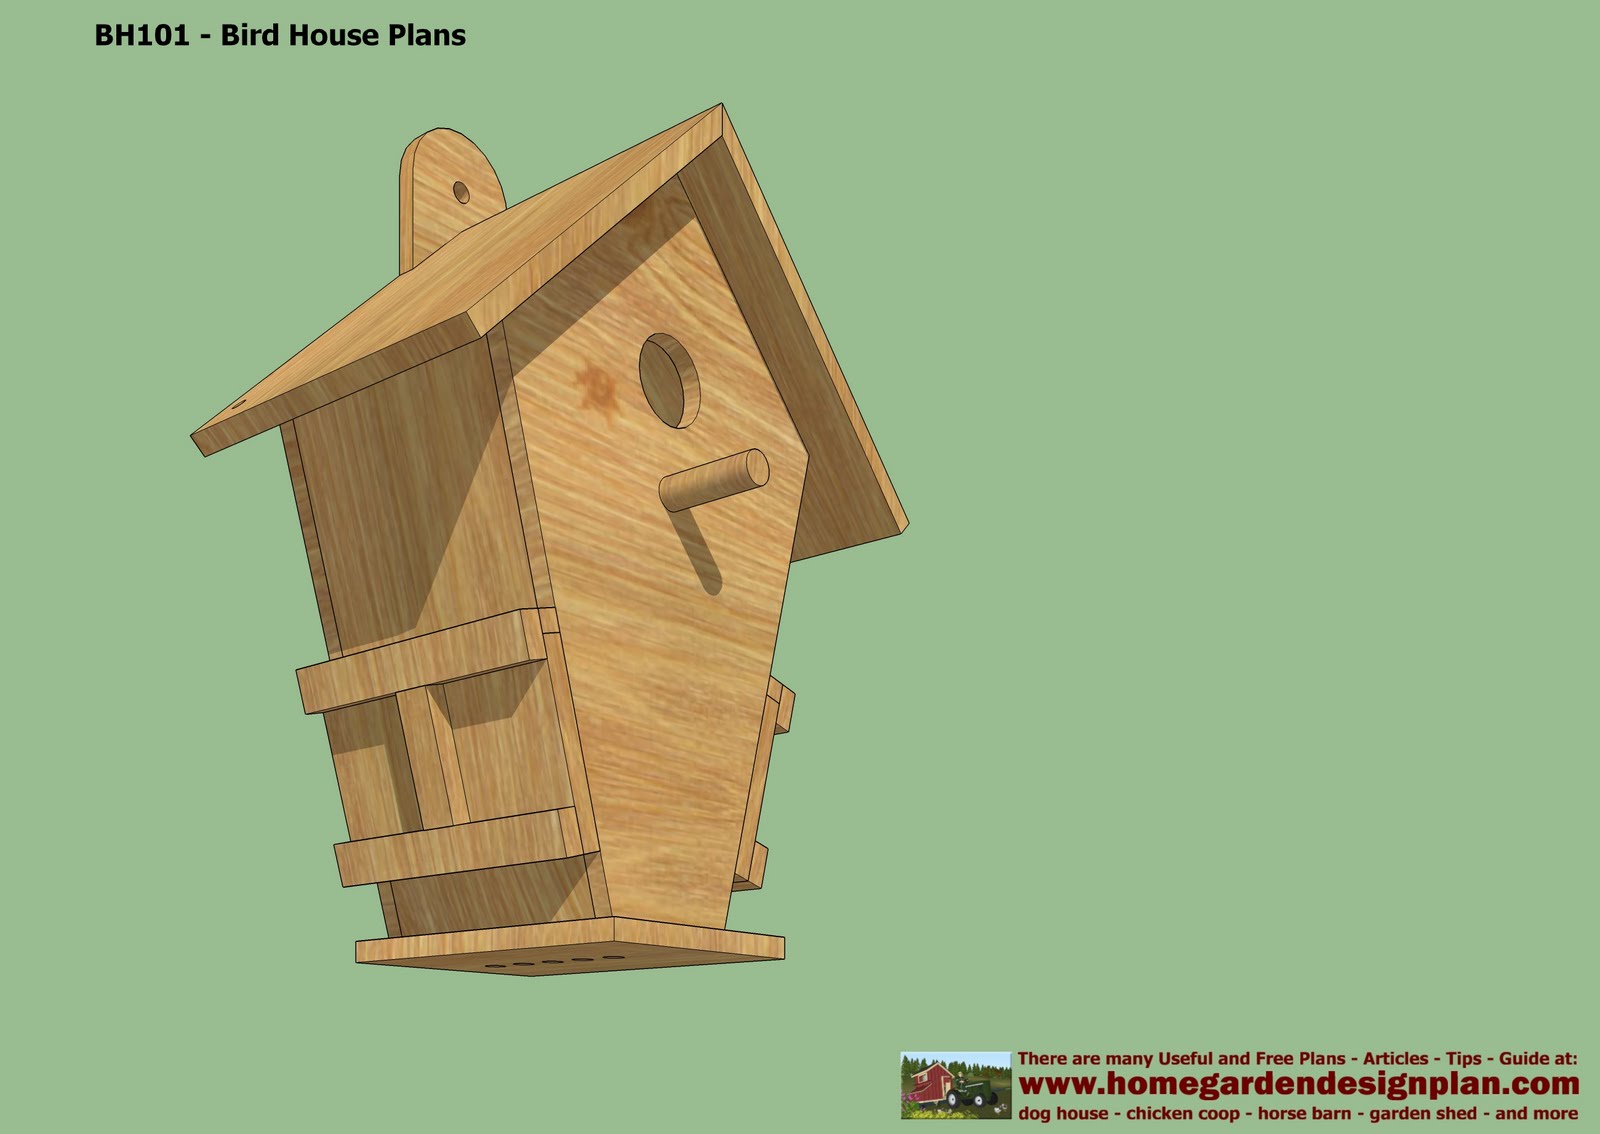  Bird House Plans Free  Free Bird House Plans  How To Build A Bird